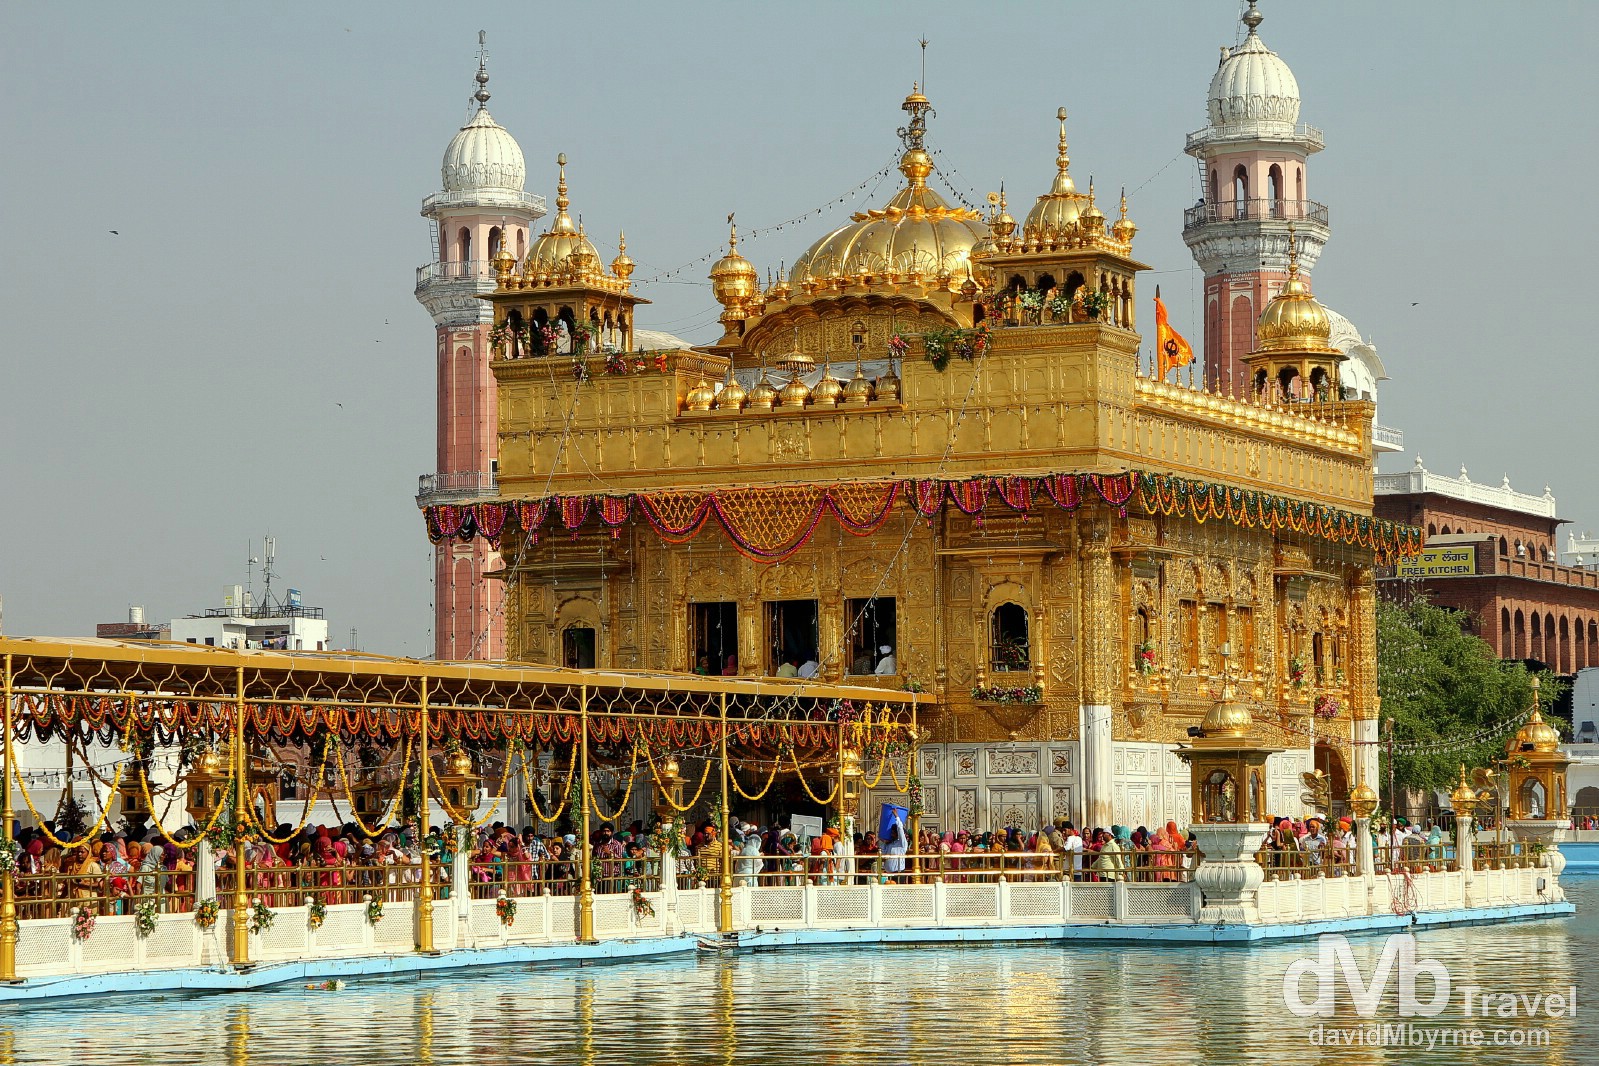 File:Golden Temple, Amritsar, Punjab India.jpg - Wikimedia Commons